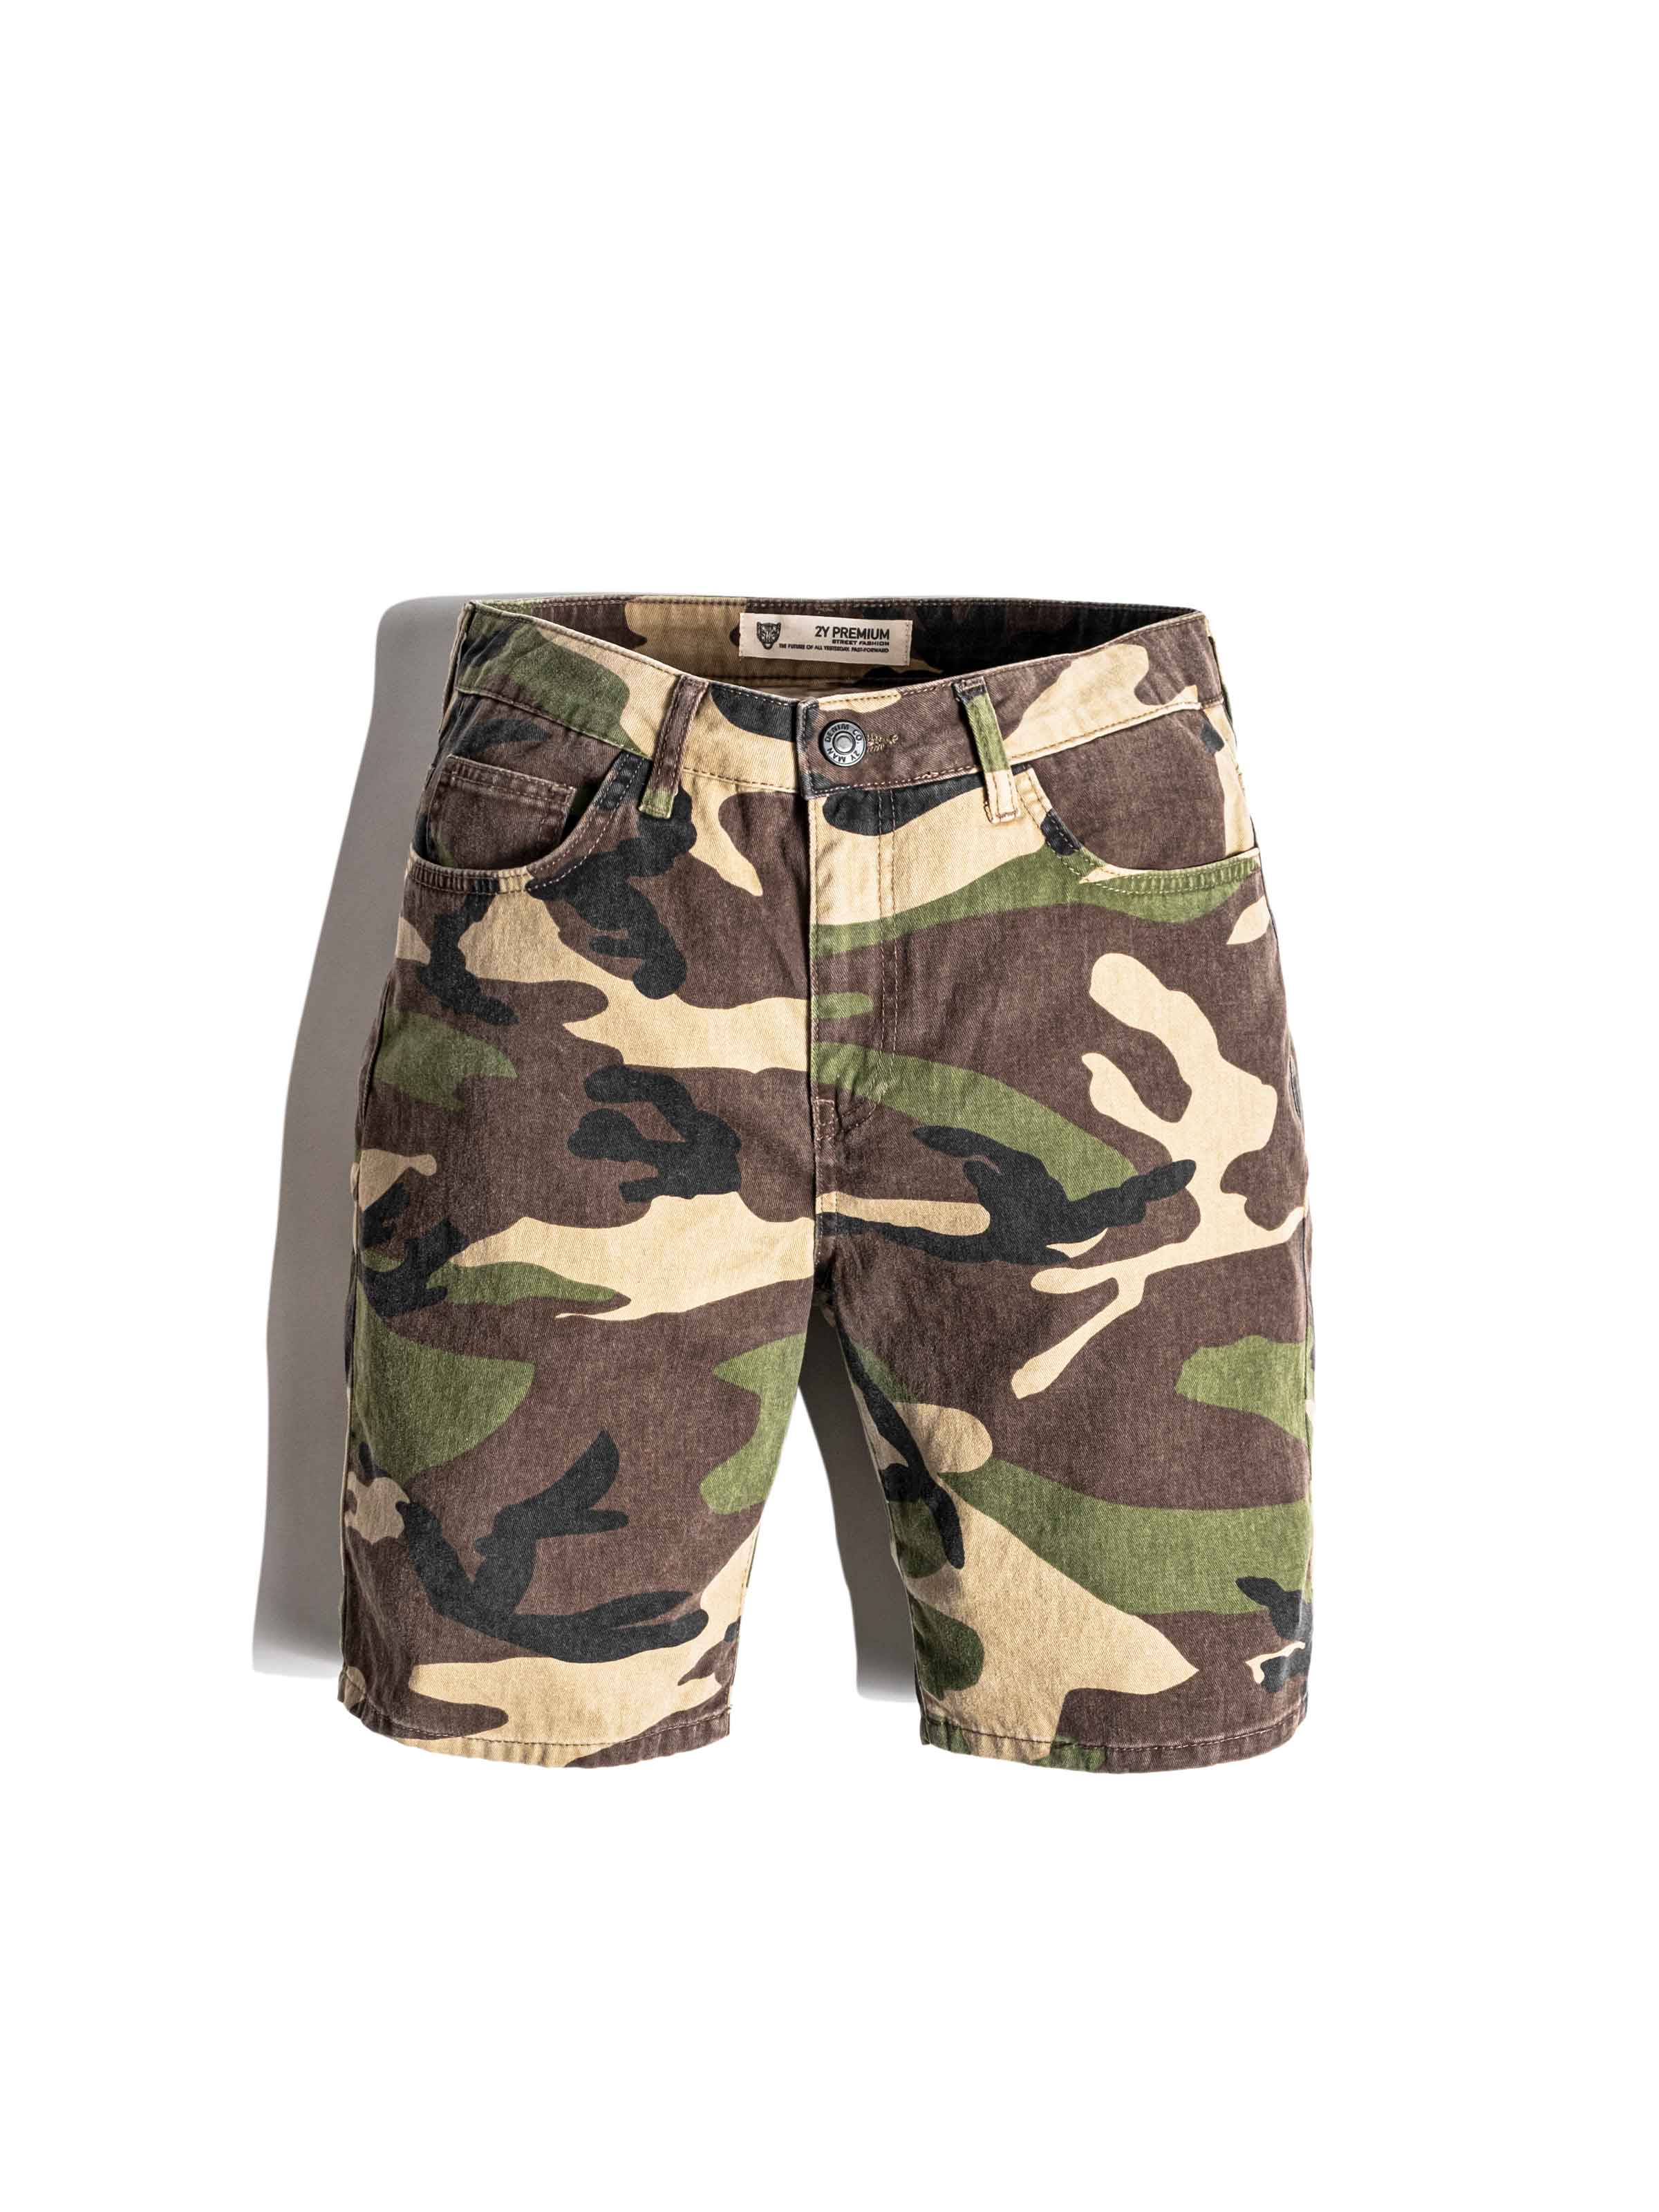 Camo Shorts, Men's Streetwear Shorts